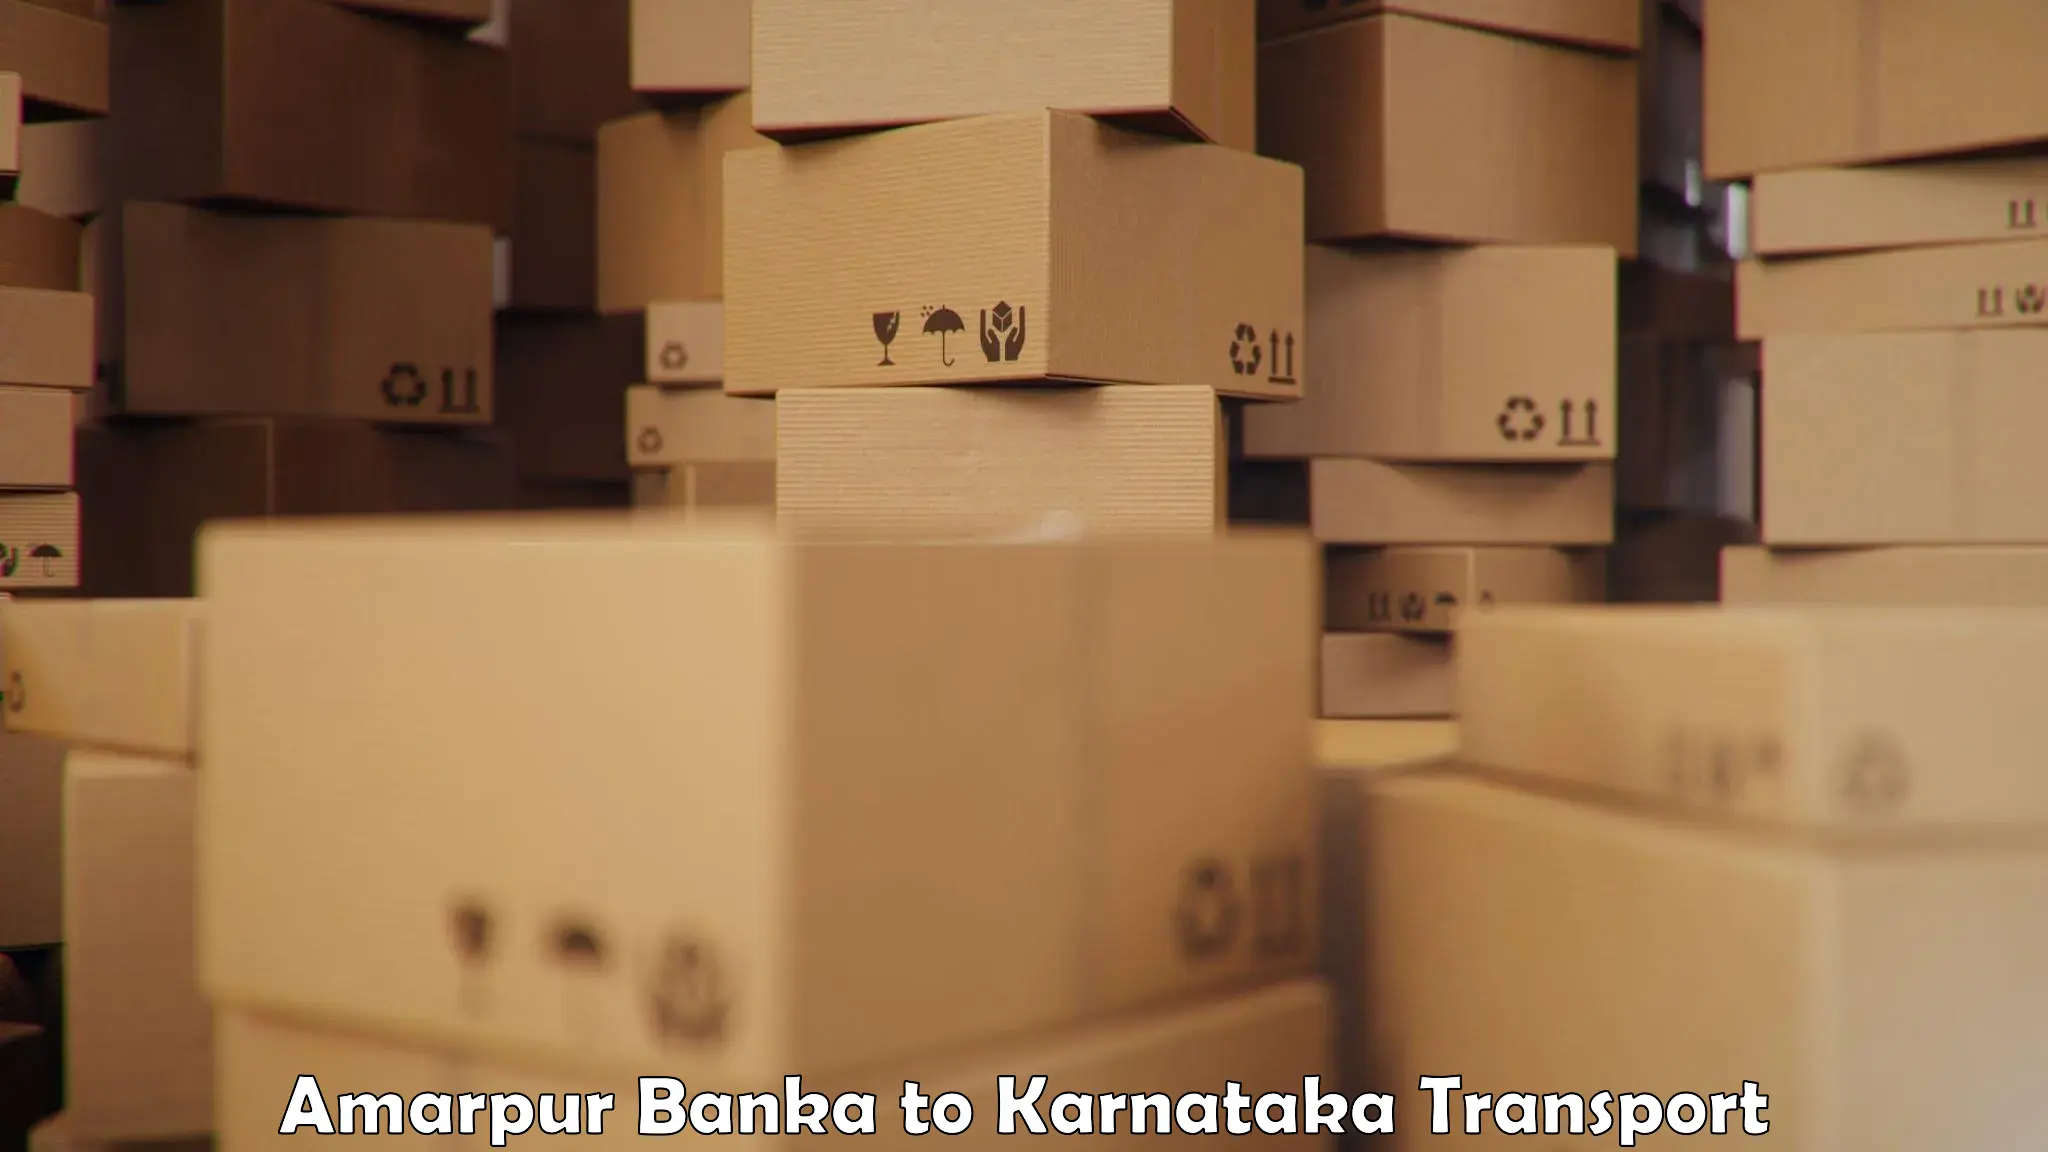 All India transport service Amarpur Banka to Gurmatkal